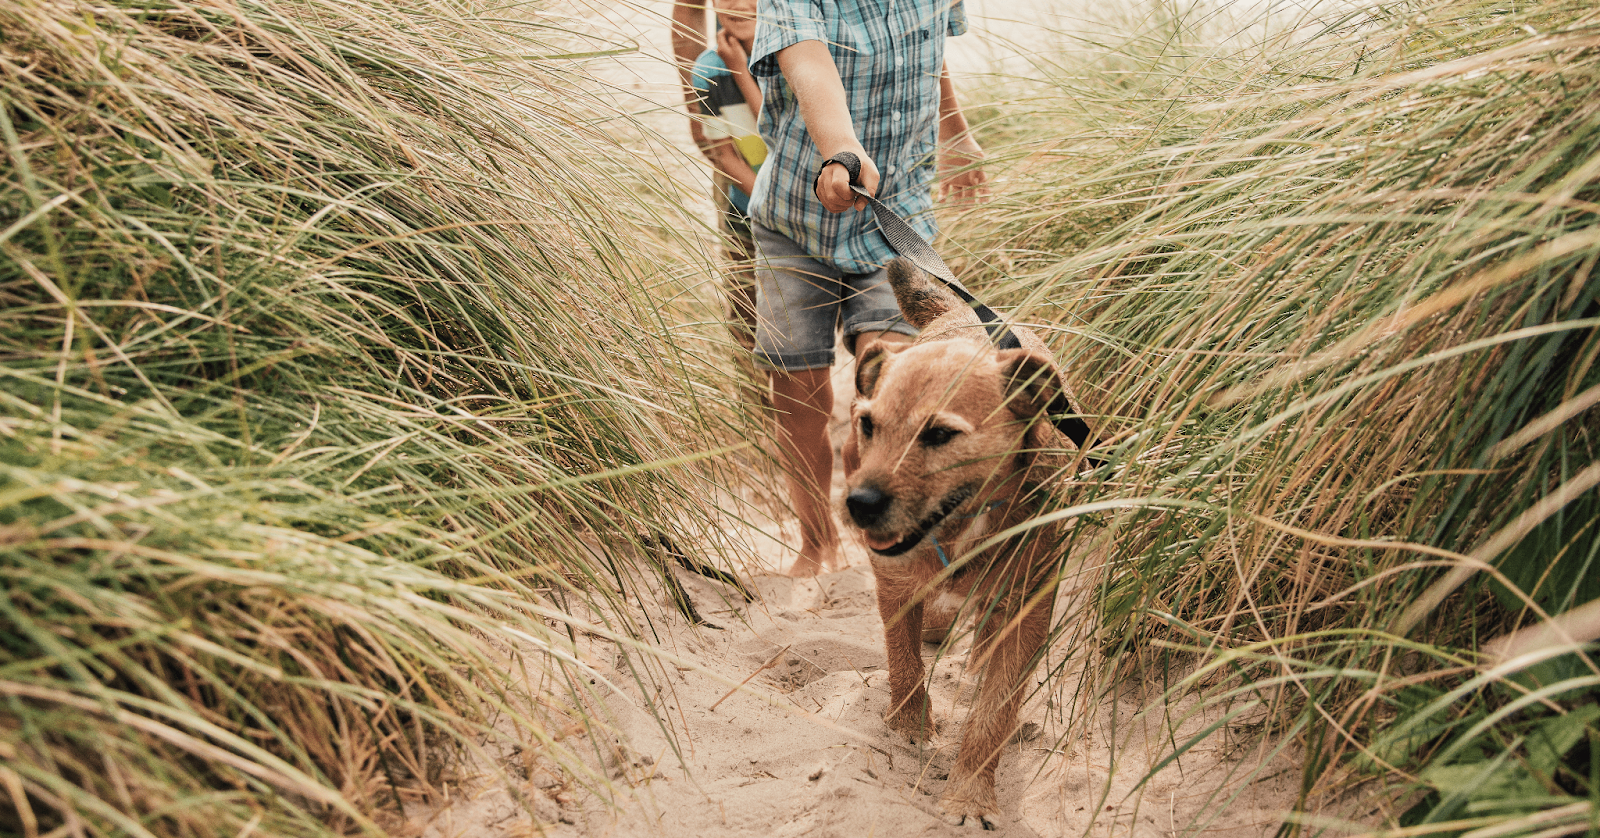 terrier dog walking through sand dunes